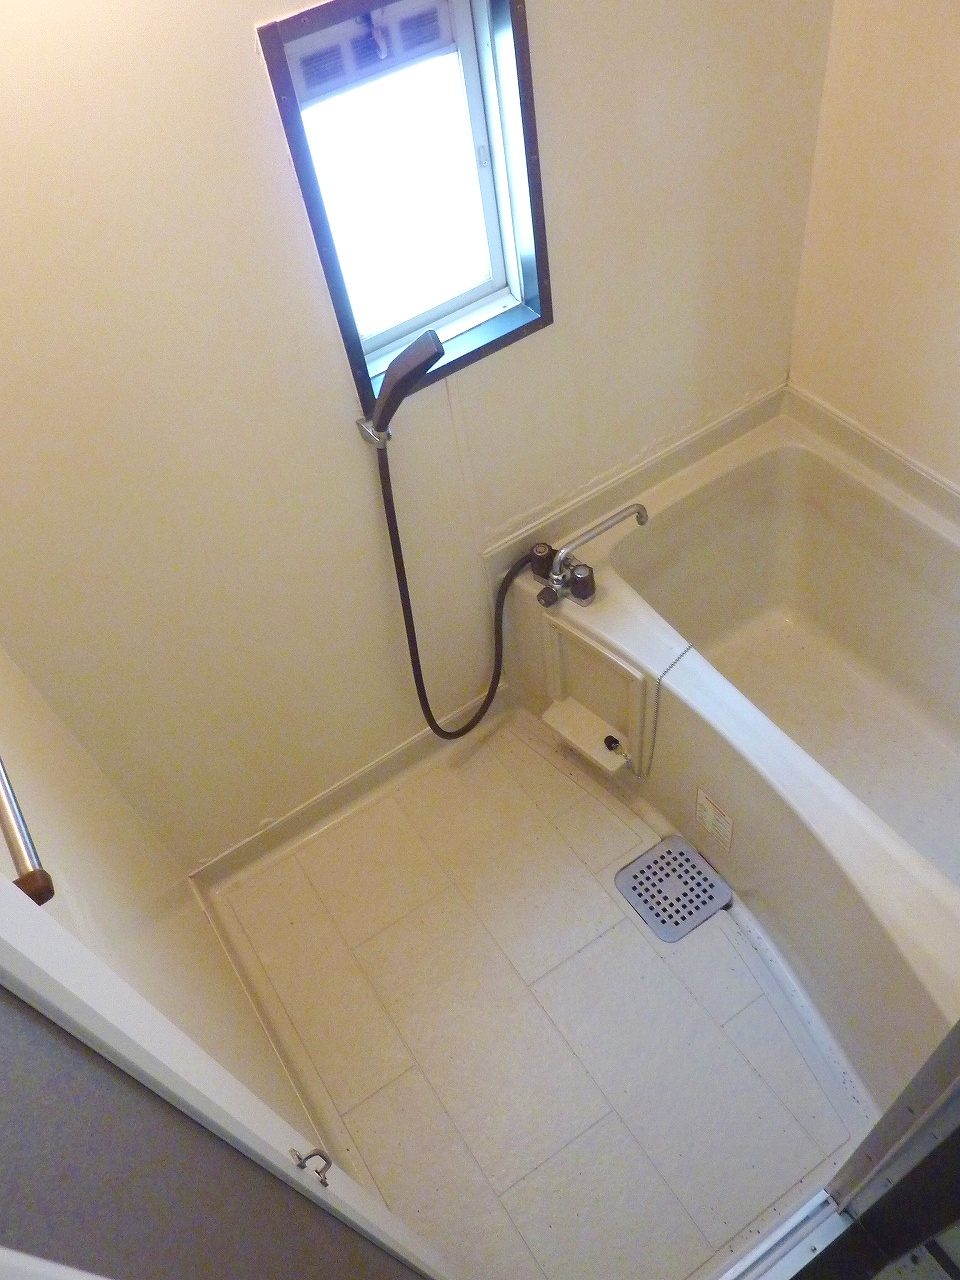 Bath. It is a bathroom with a small window ☆ Economic city gas ☆ 